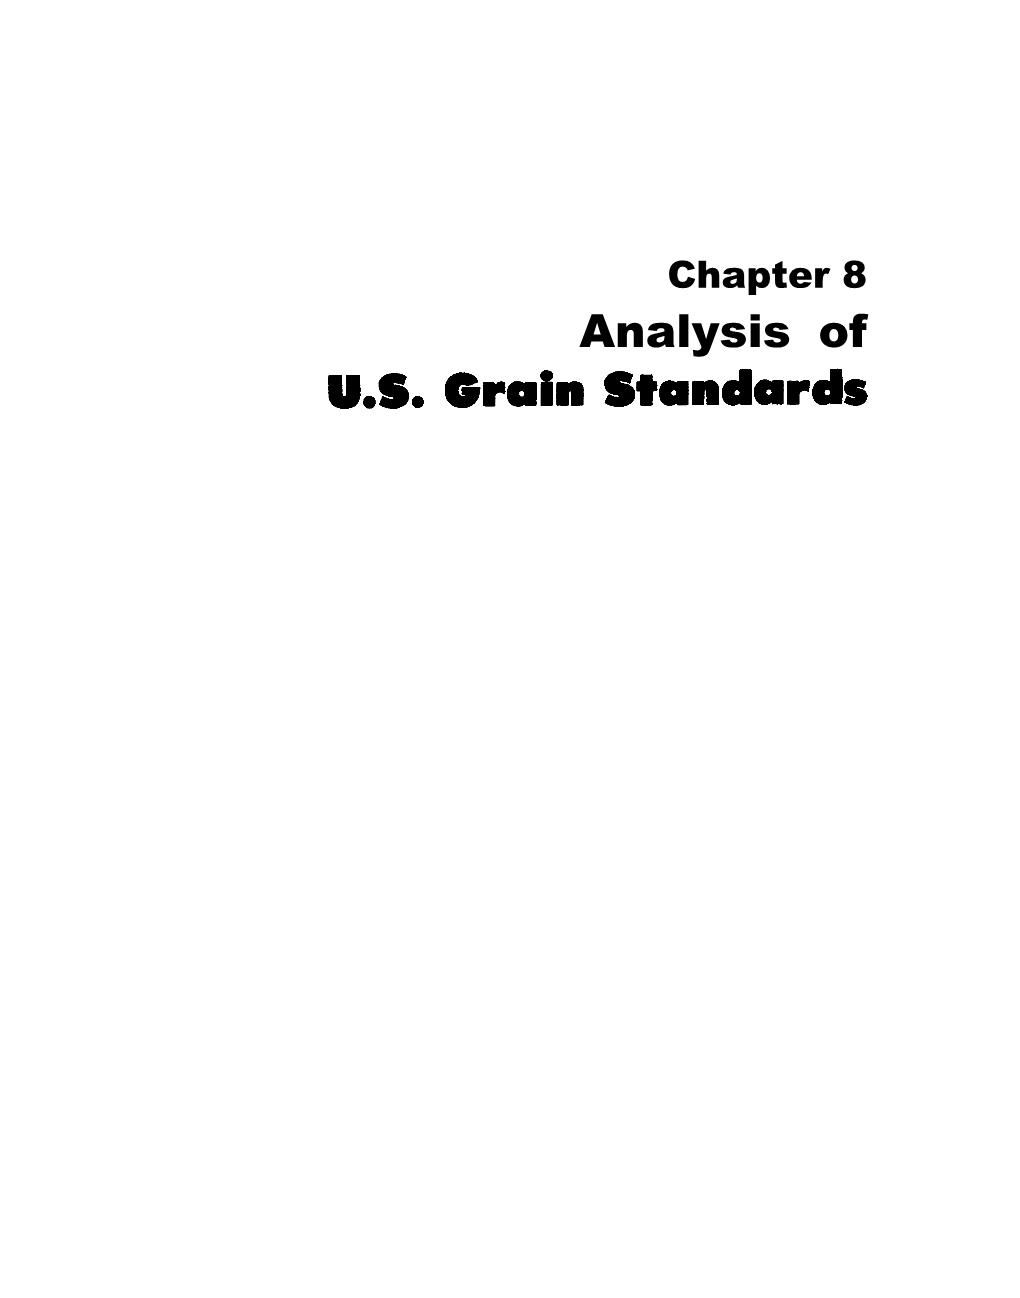 Analysis of U.S. Grain Standards